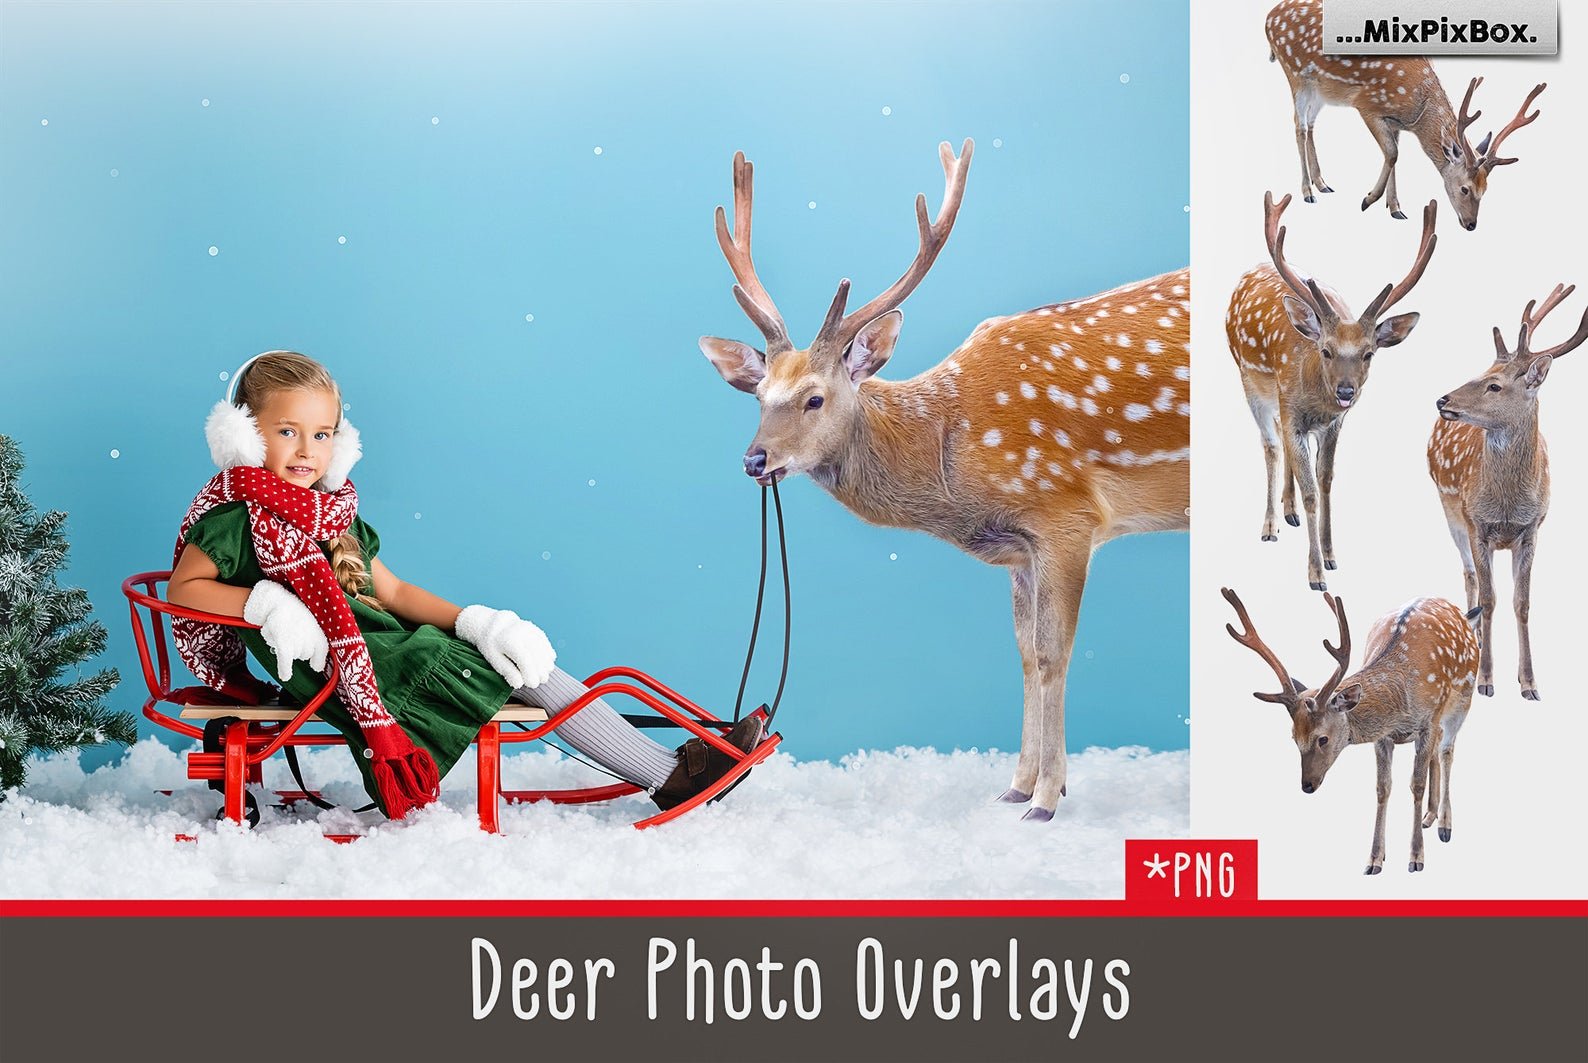 Deer Photo Overlayscover image.